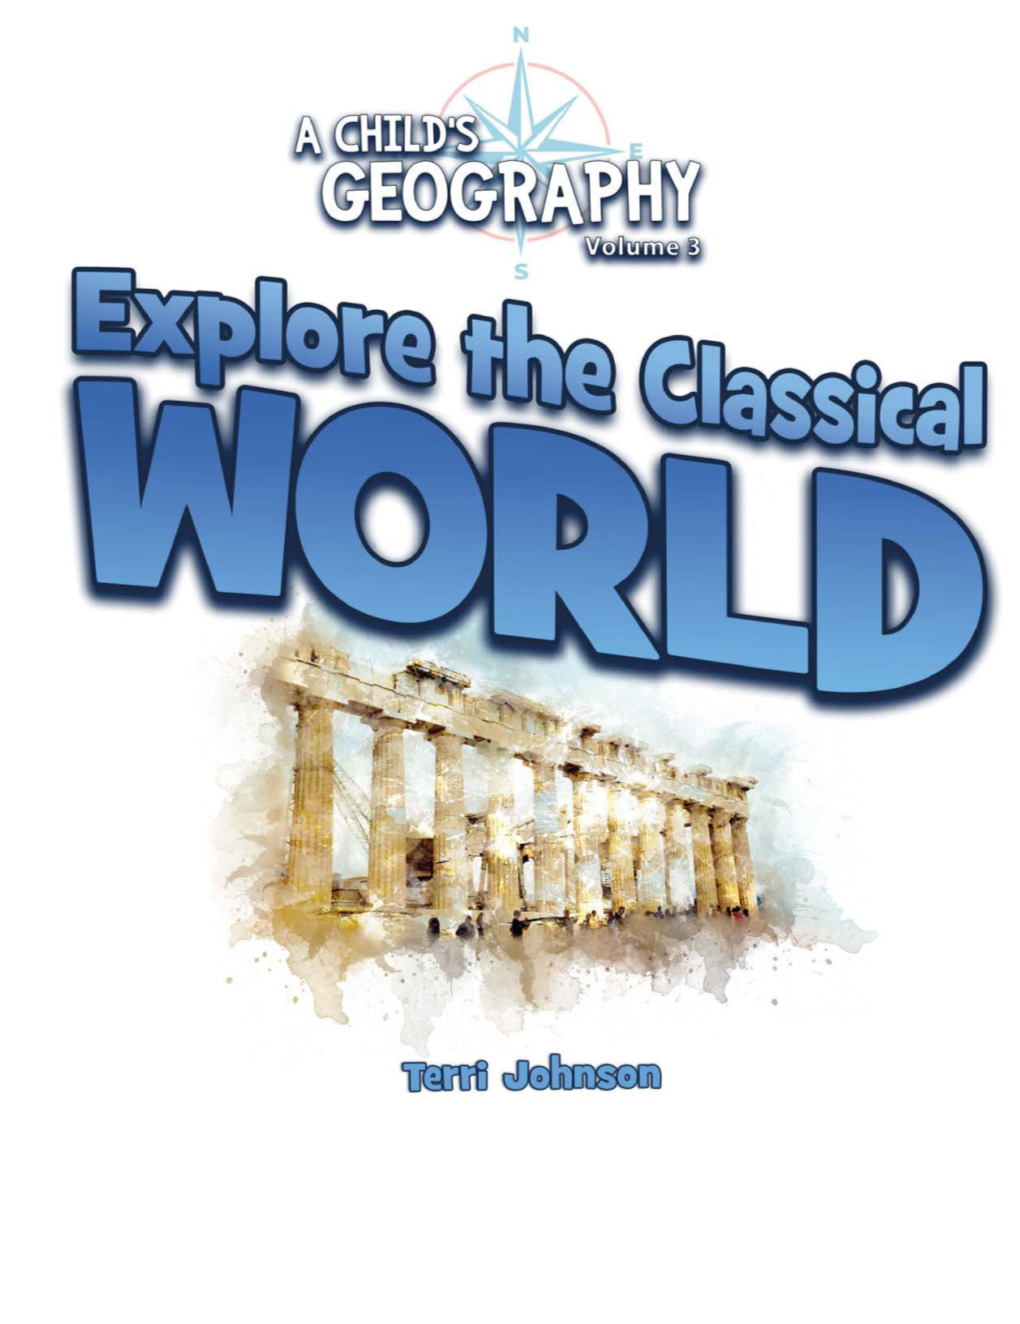 Explore the Classical World Teacher, Set the Course!